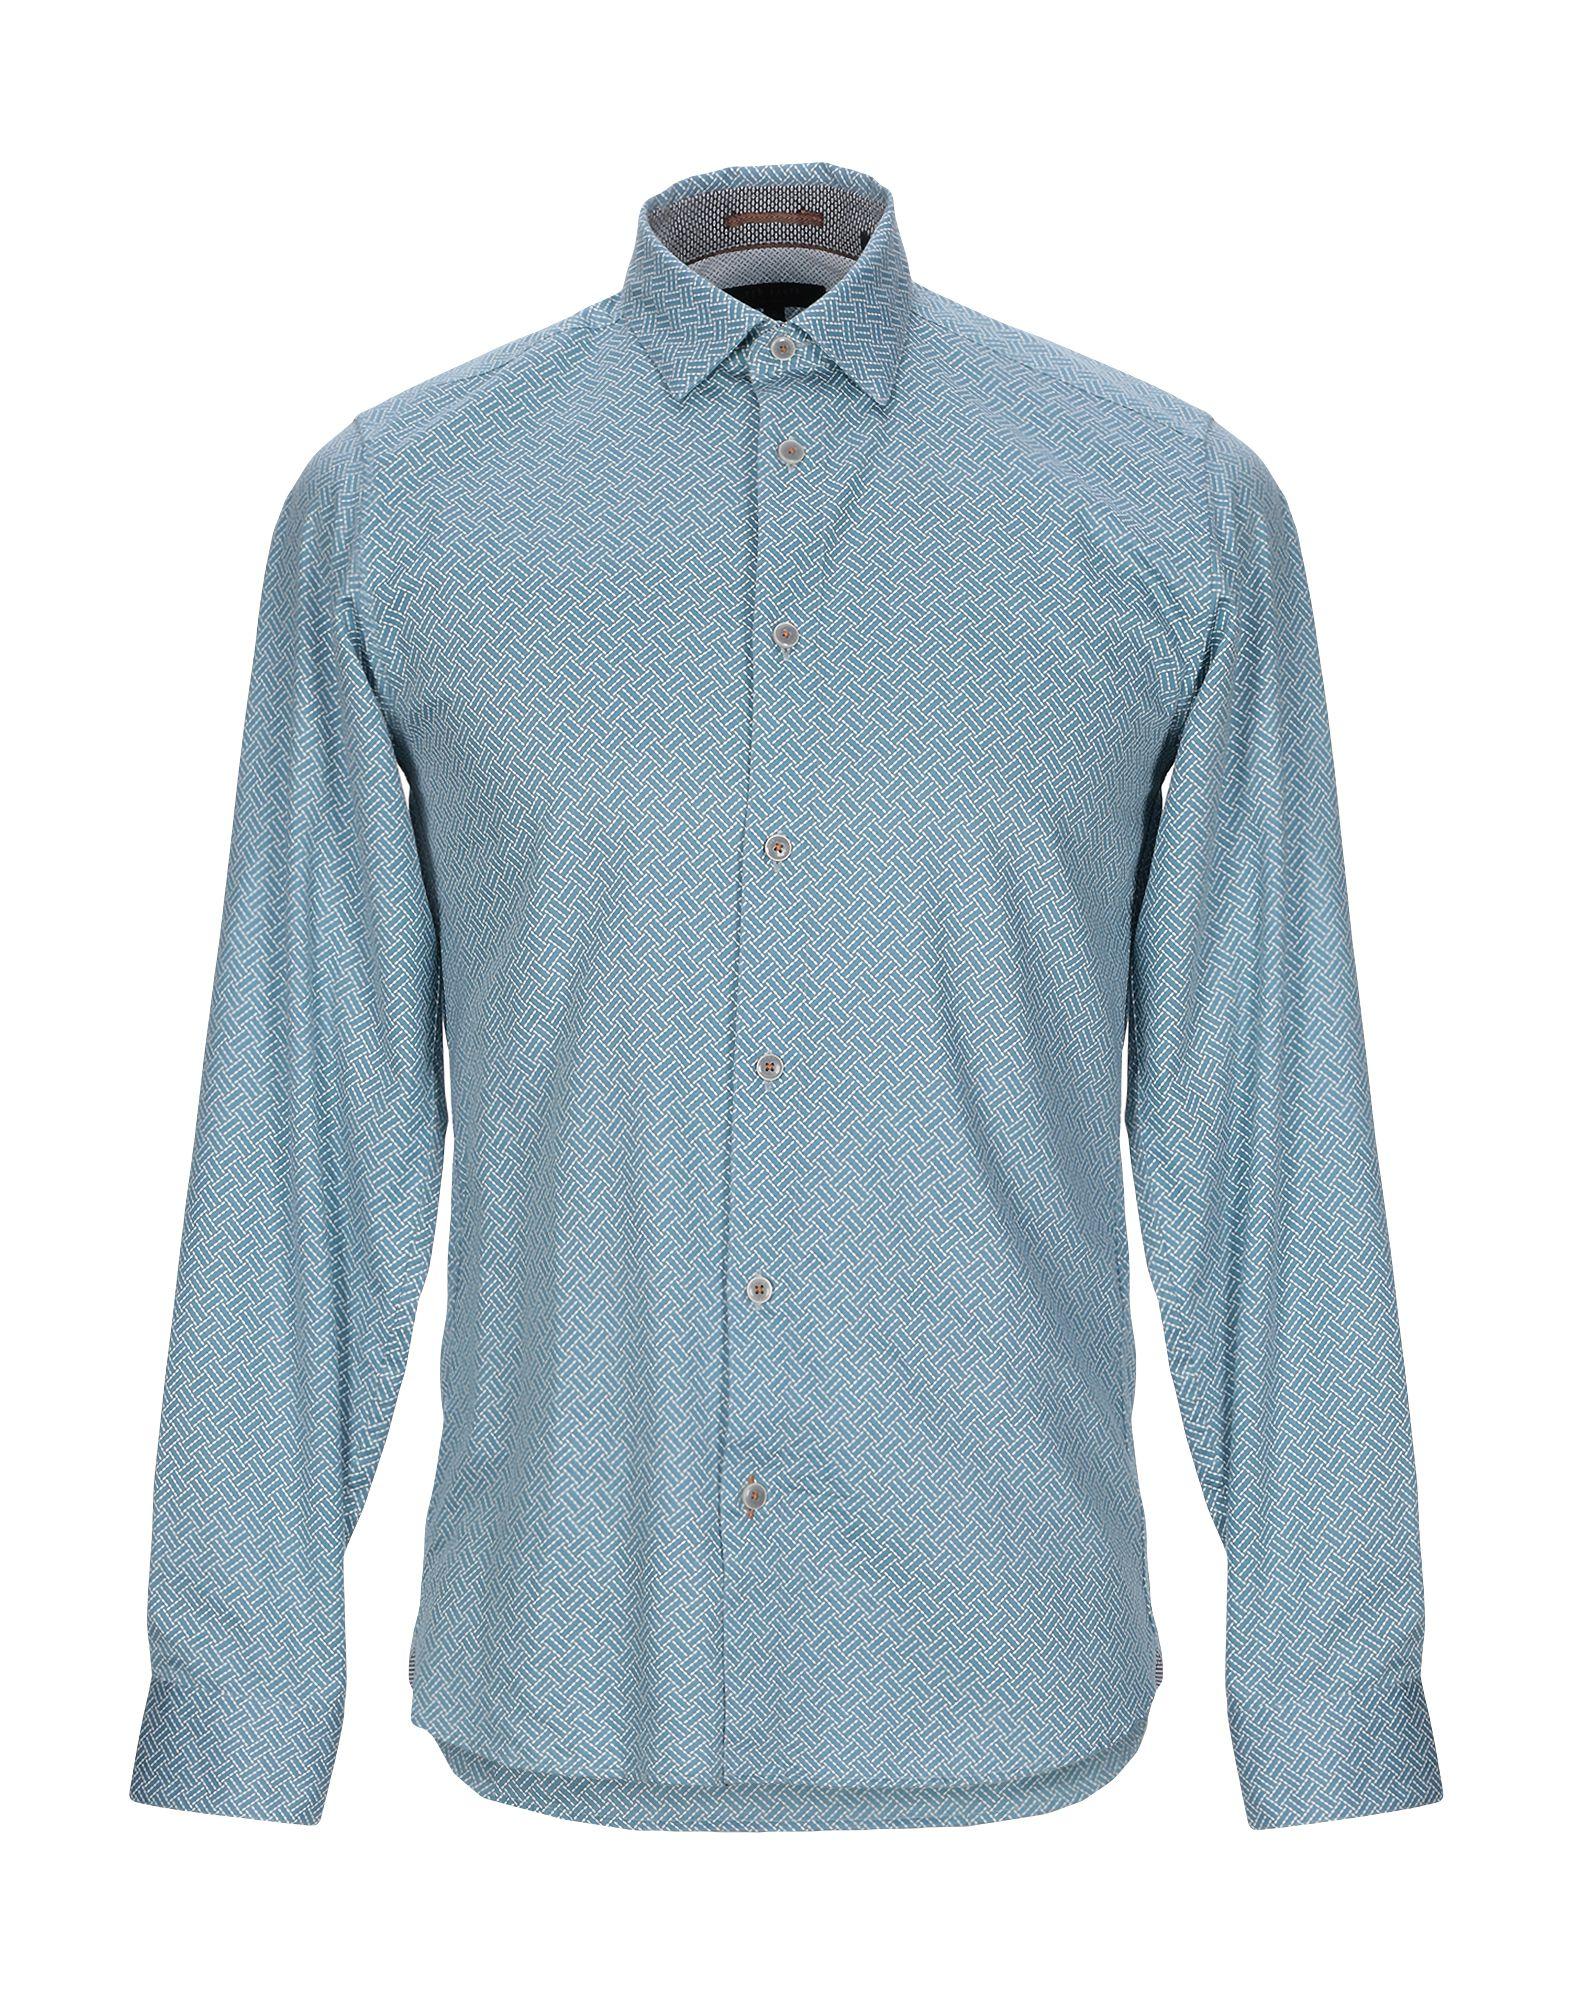 Ted Baker Cotton Shirt in Slate Blue (Blue) for Men - Lyst